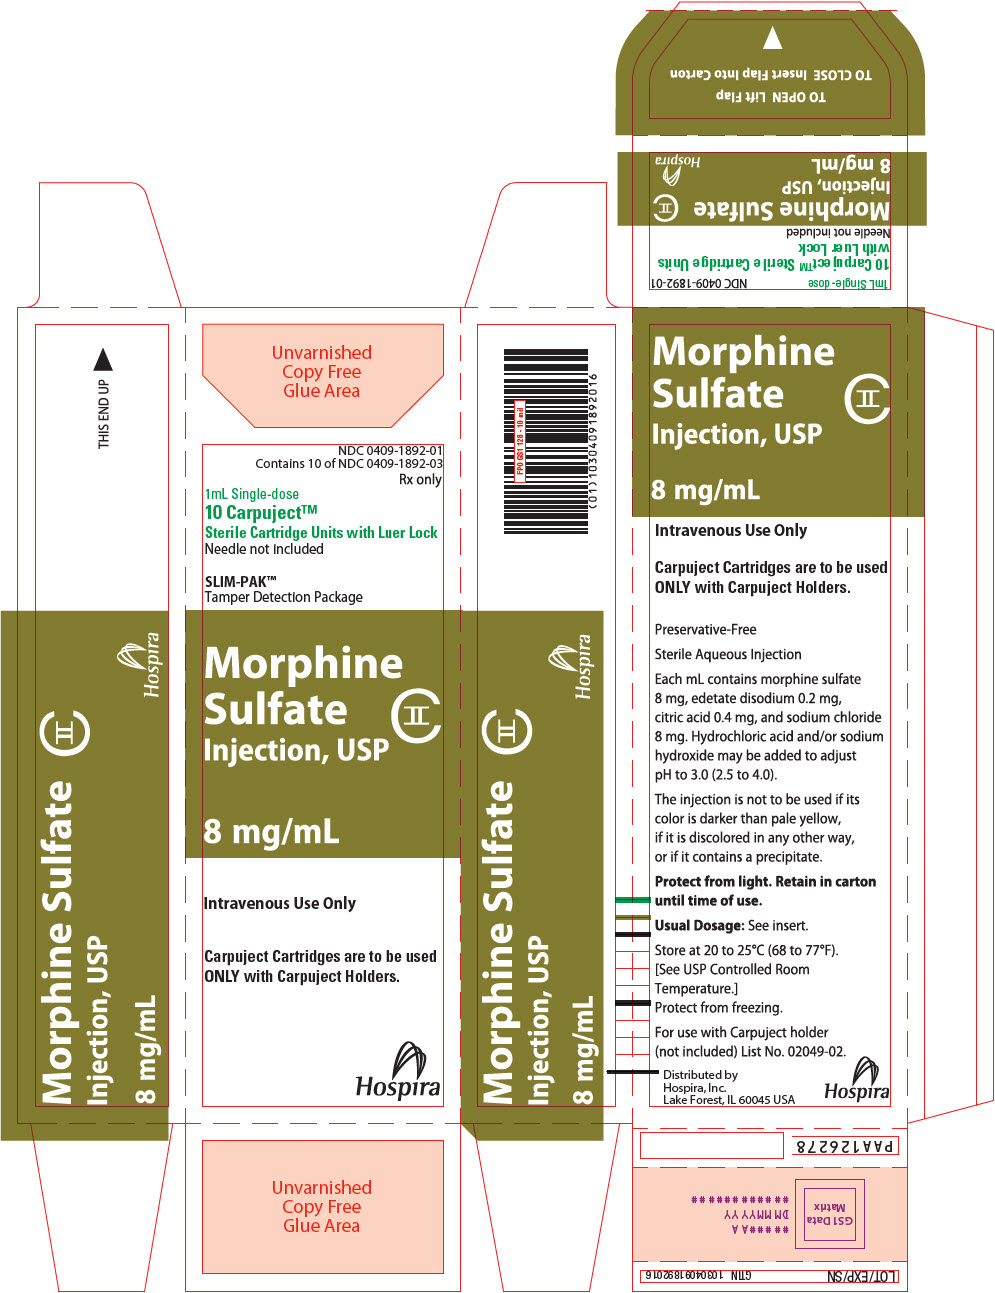 PRINCIPAL DISPLAY PANEL - 8 mg/mL Cartridge Carton